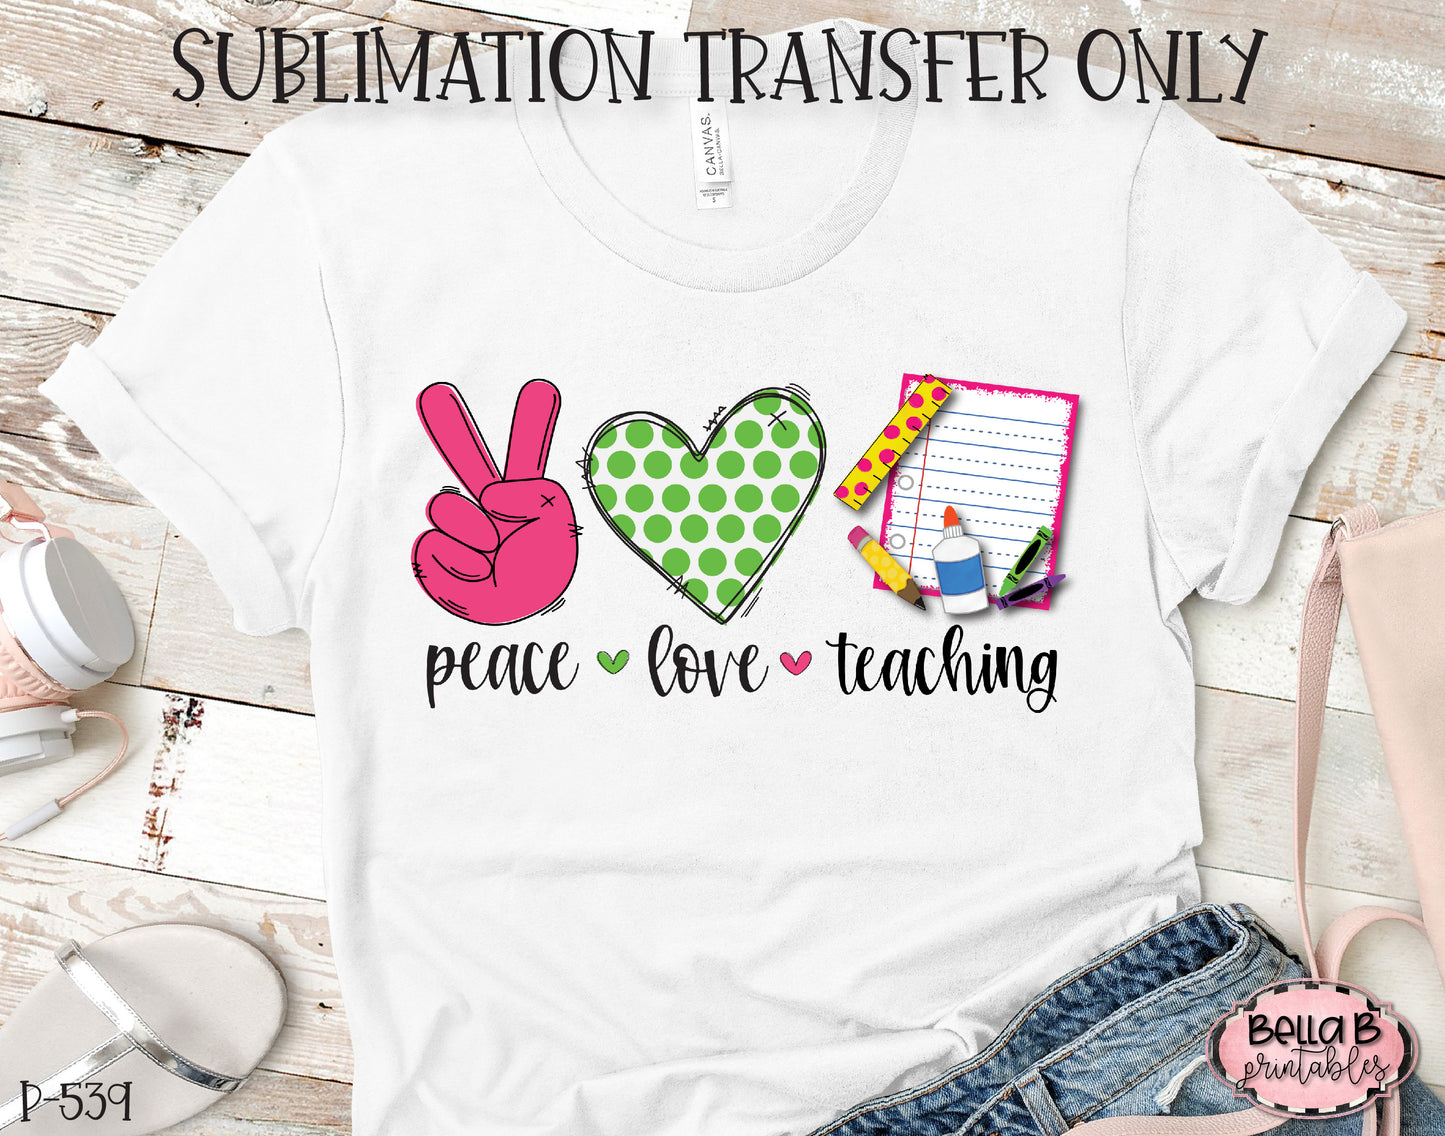 Peace Love Teaching Sublimation Transfer, Ready To Press, Heat Press Transfer, Sublimation Print